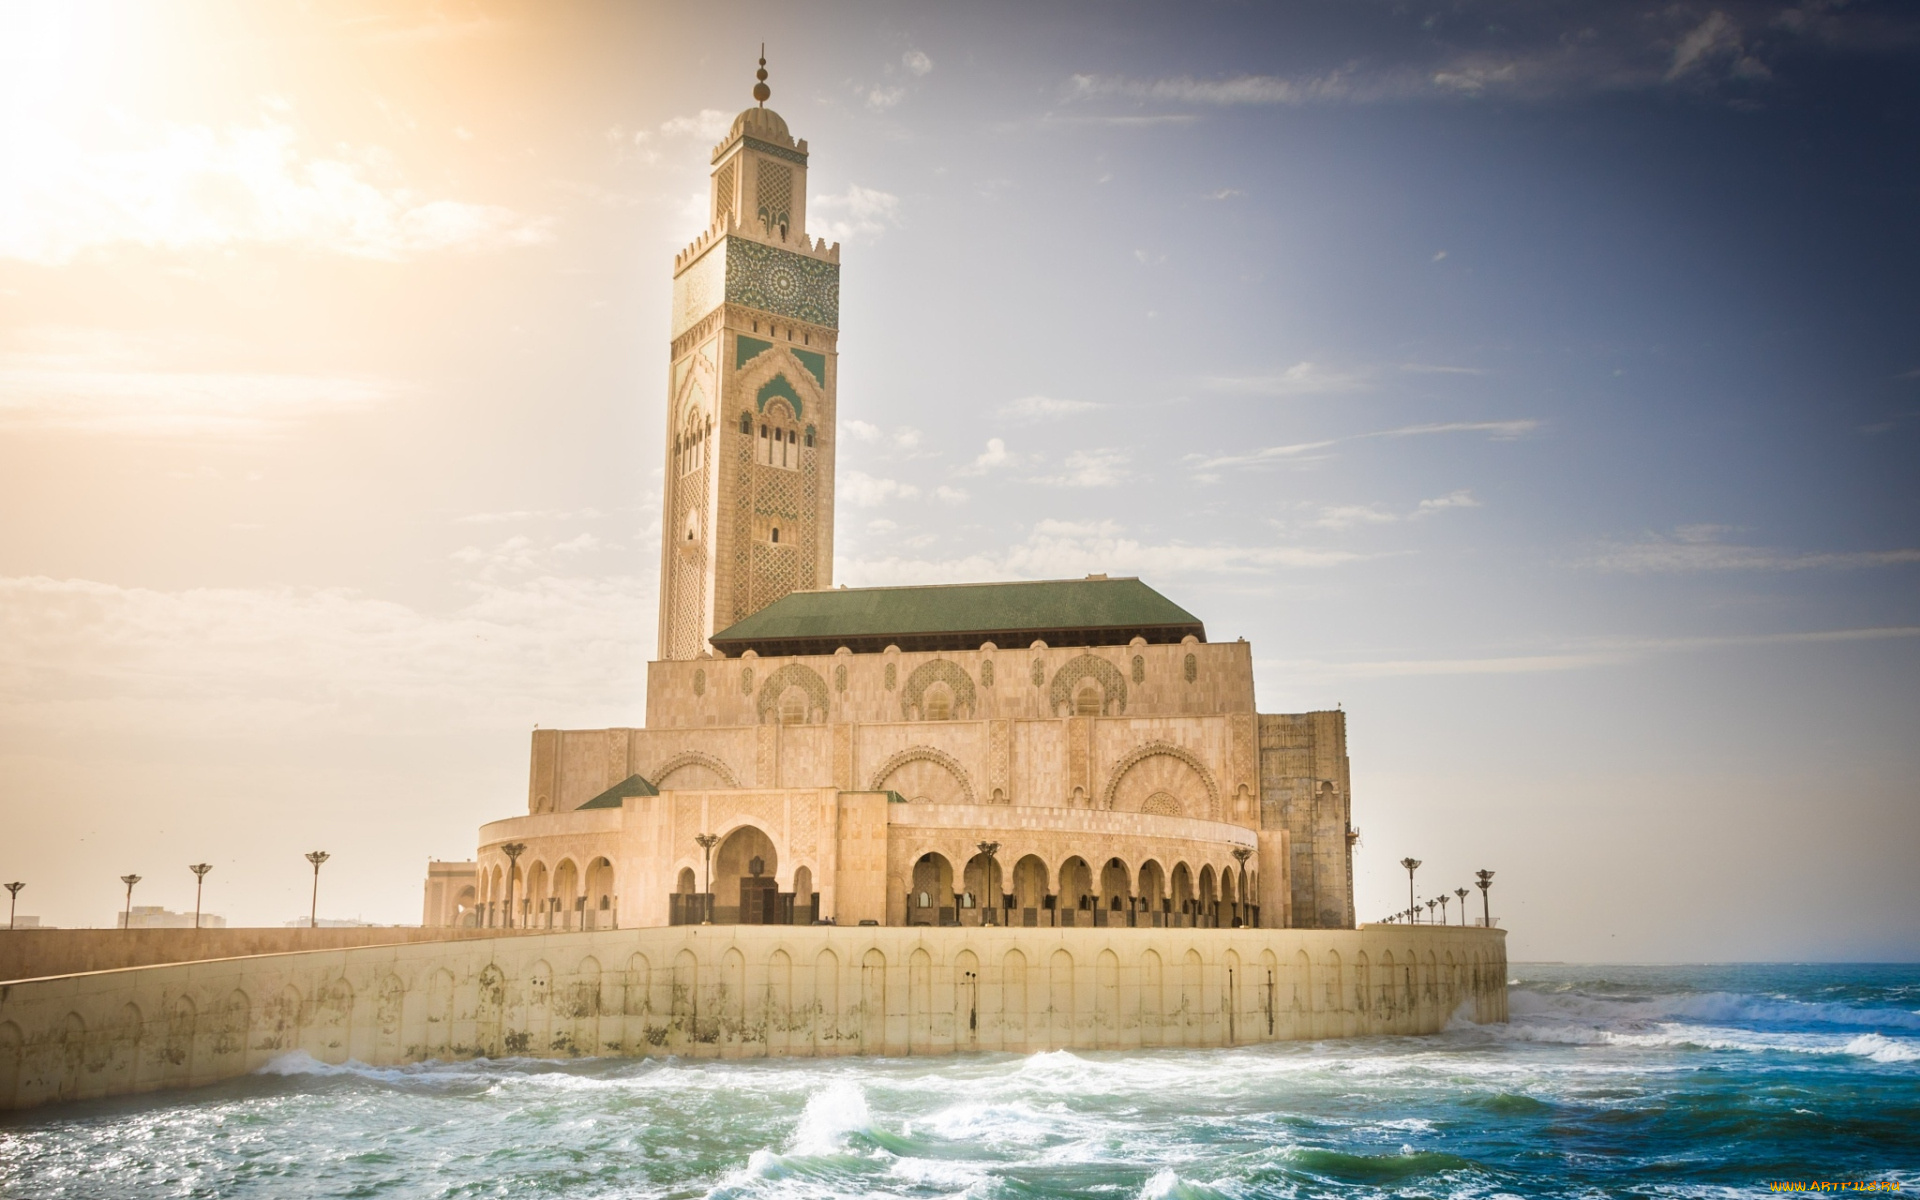 города, -, мечети, , медресе, касабланка, мечеть, хасана, мавританская, архитектура, марокко, побережье, атлантический, океан